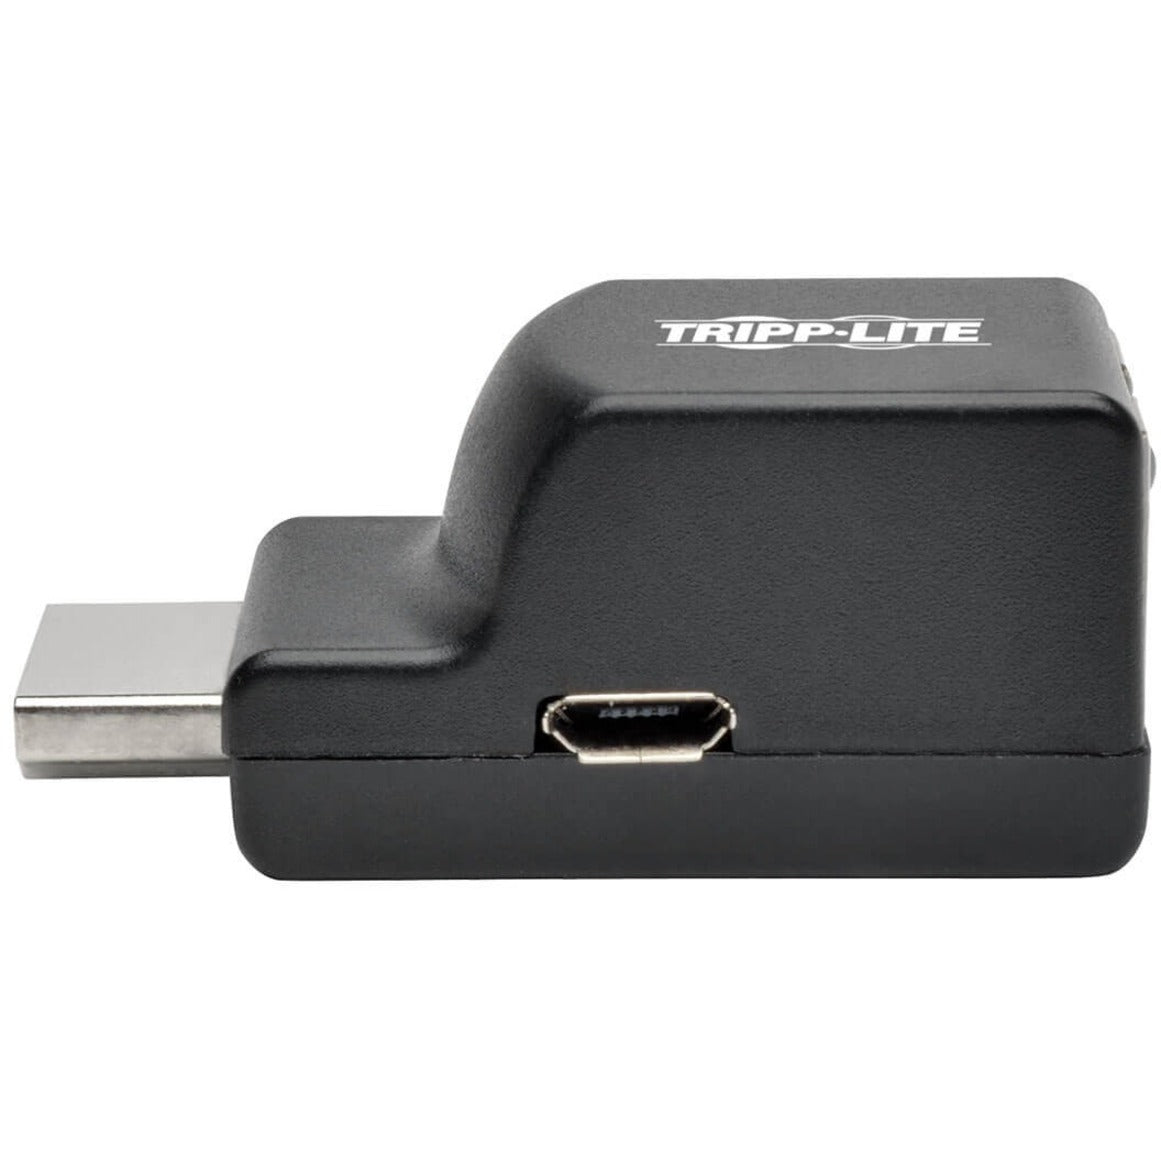 Tripp Lite B126-1P0-MINI HDMI over Cat5e/Cat6 Passive Extender, Low-Profile Remote Receiver for Full HD Video, 1920 x 1080 Resolution, 1 Year Warranty